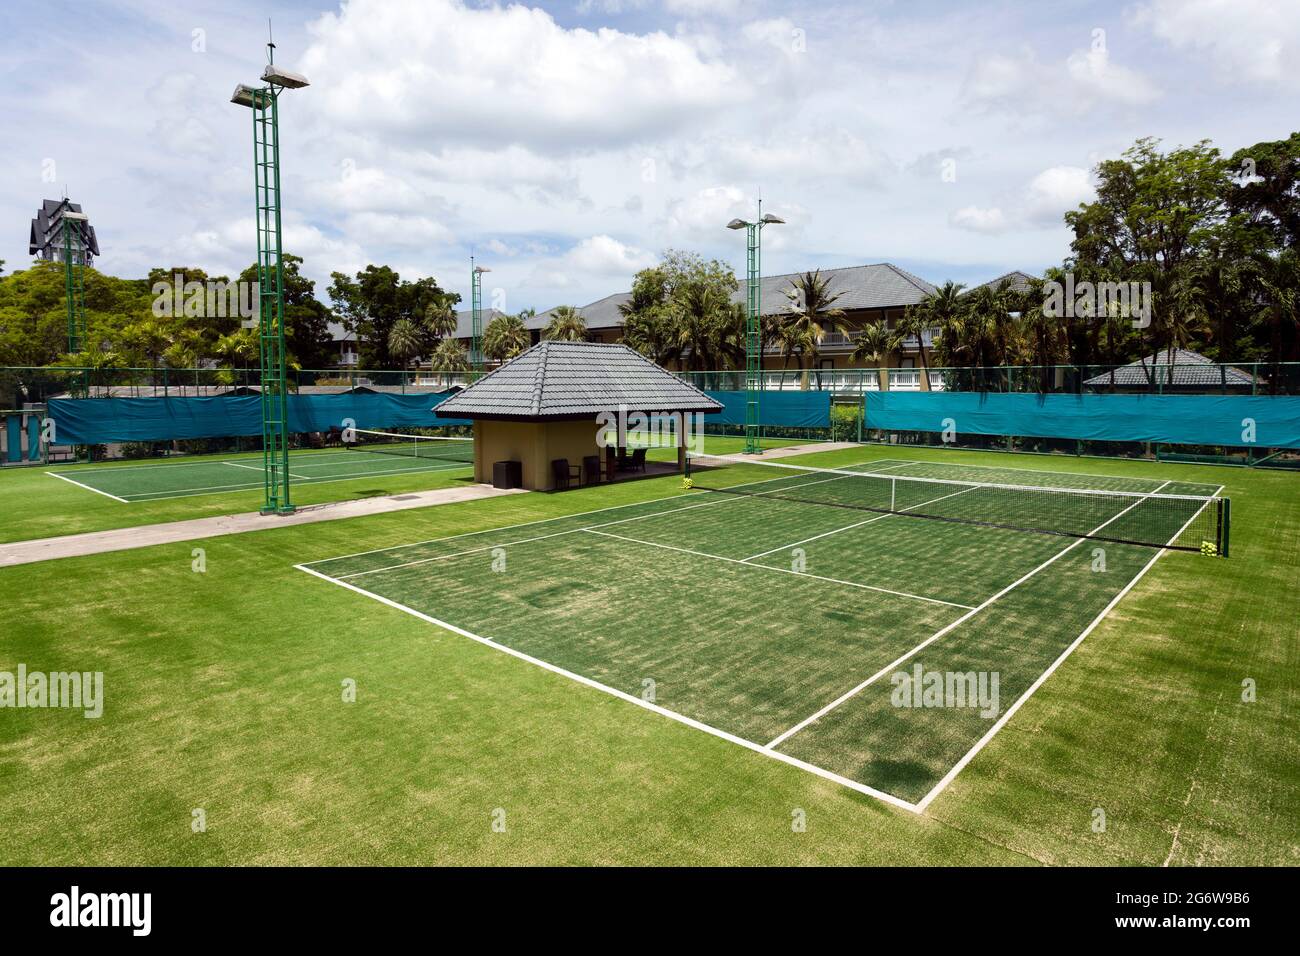 Campo da tennis in erba presso l'hotel Angsana Laguna Phuket a Phuket, Thailandia. Foto Stock